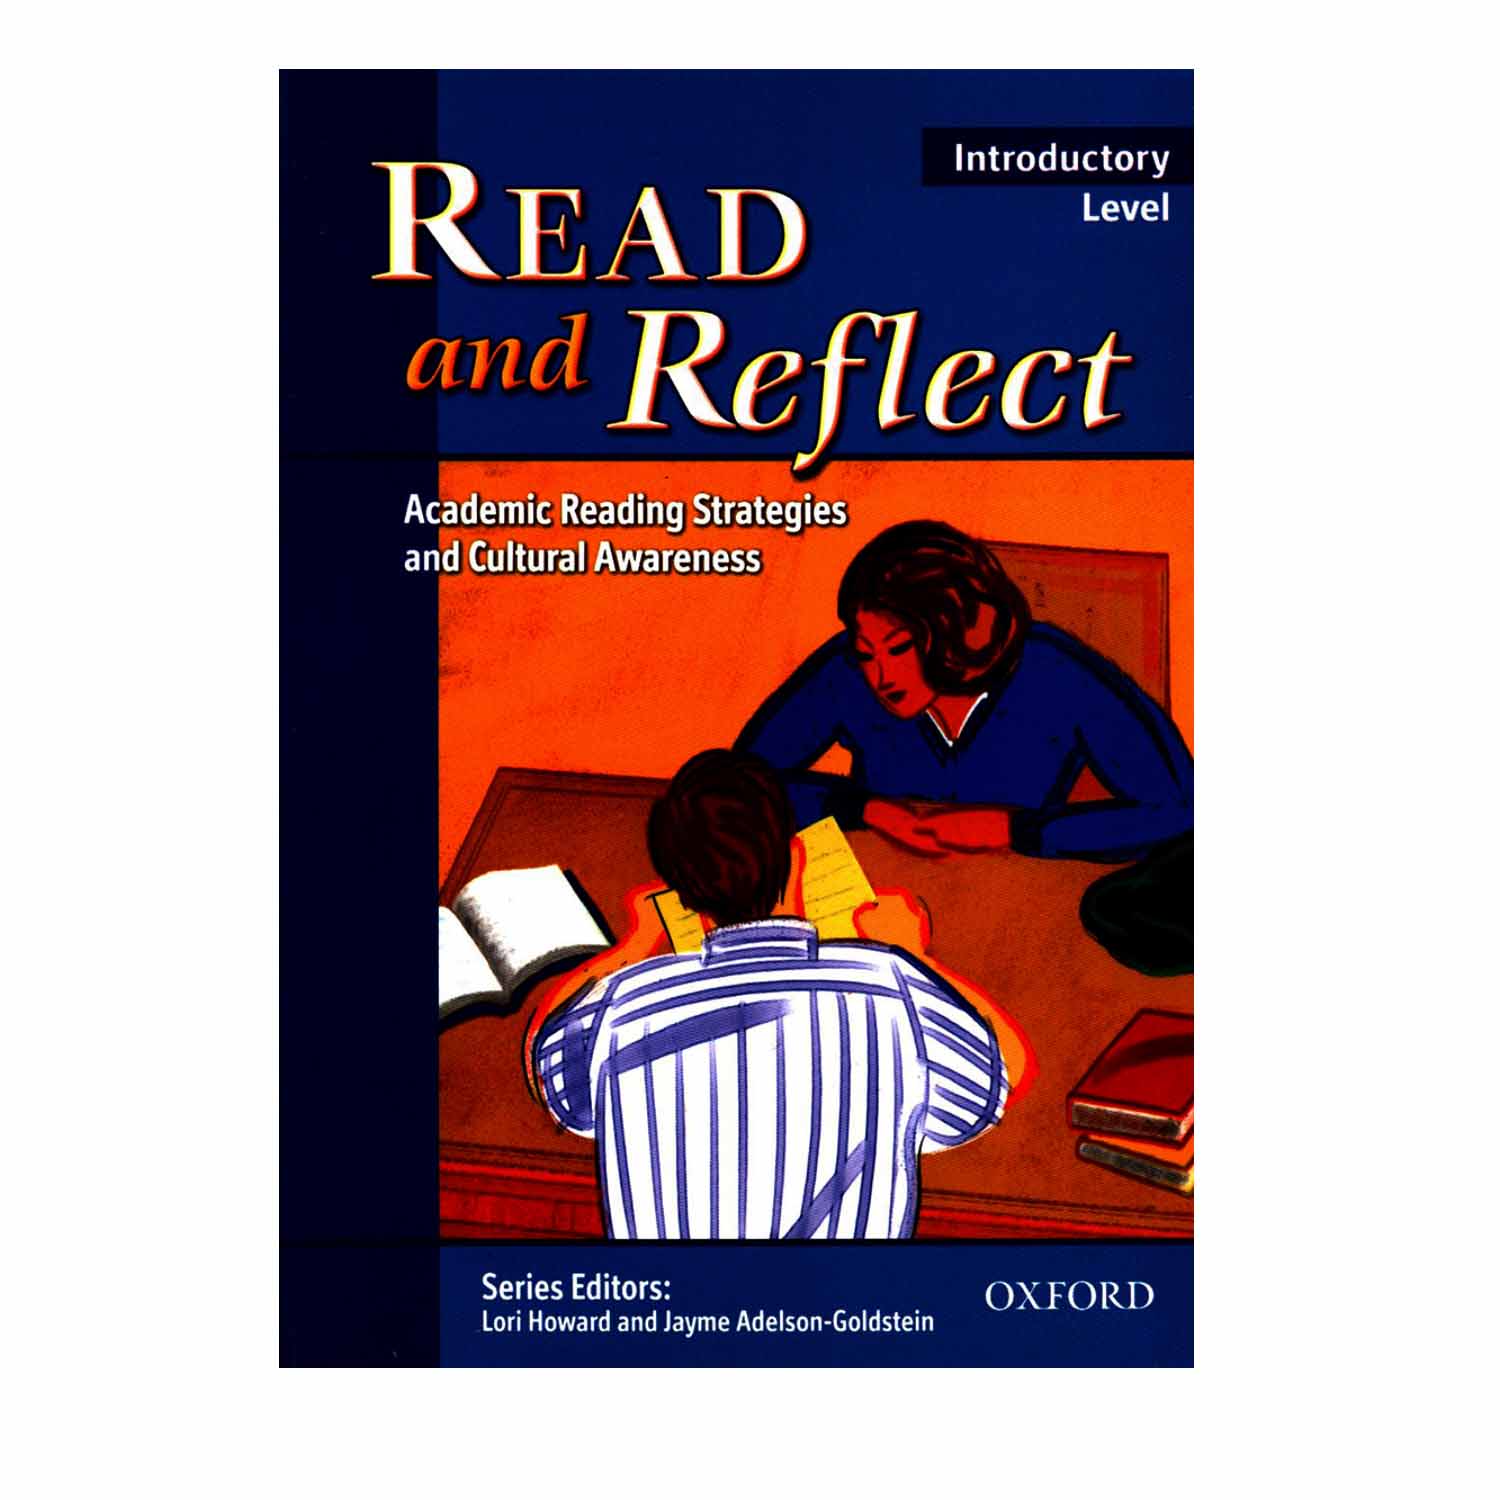 نقد و بررسی کتاب READ and Reflect اثر Lori Howard and Jayme Adelson Goldstein انتشارات OXFORD توسط خریداران